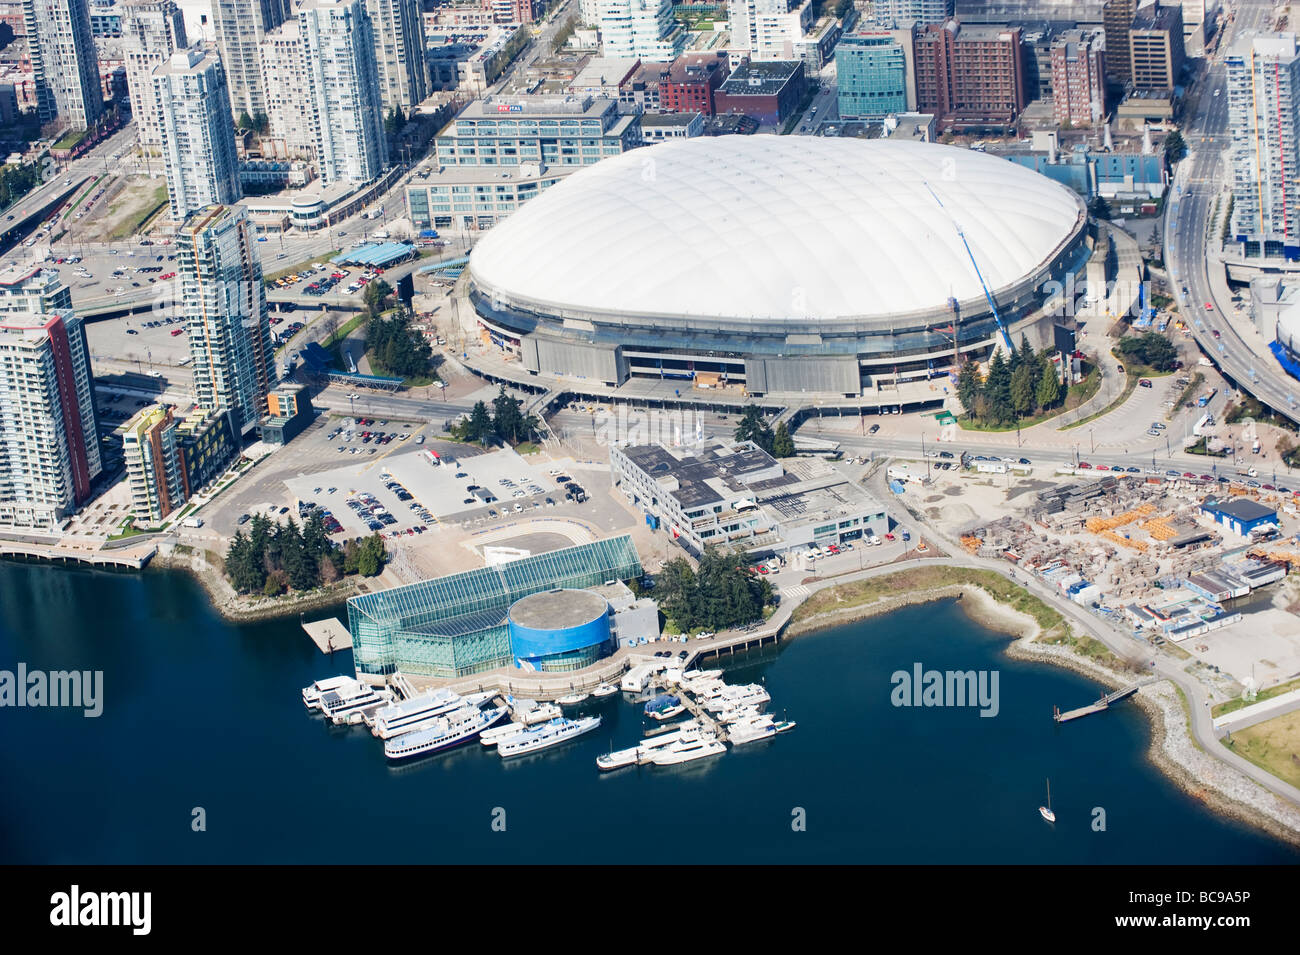 The British Columbia Place Stadium - Olympic News